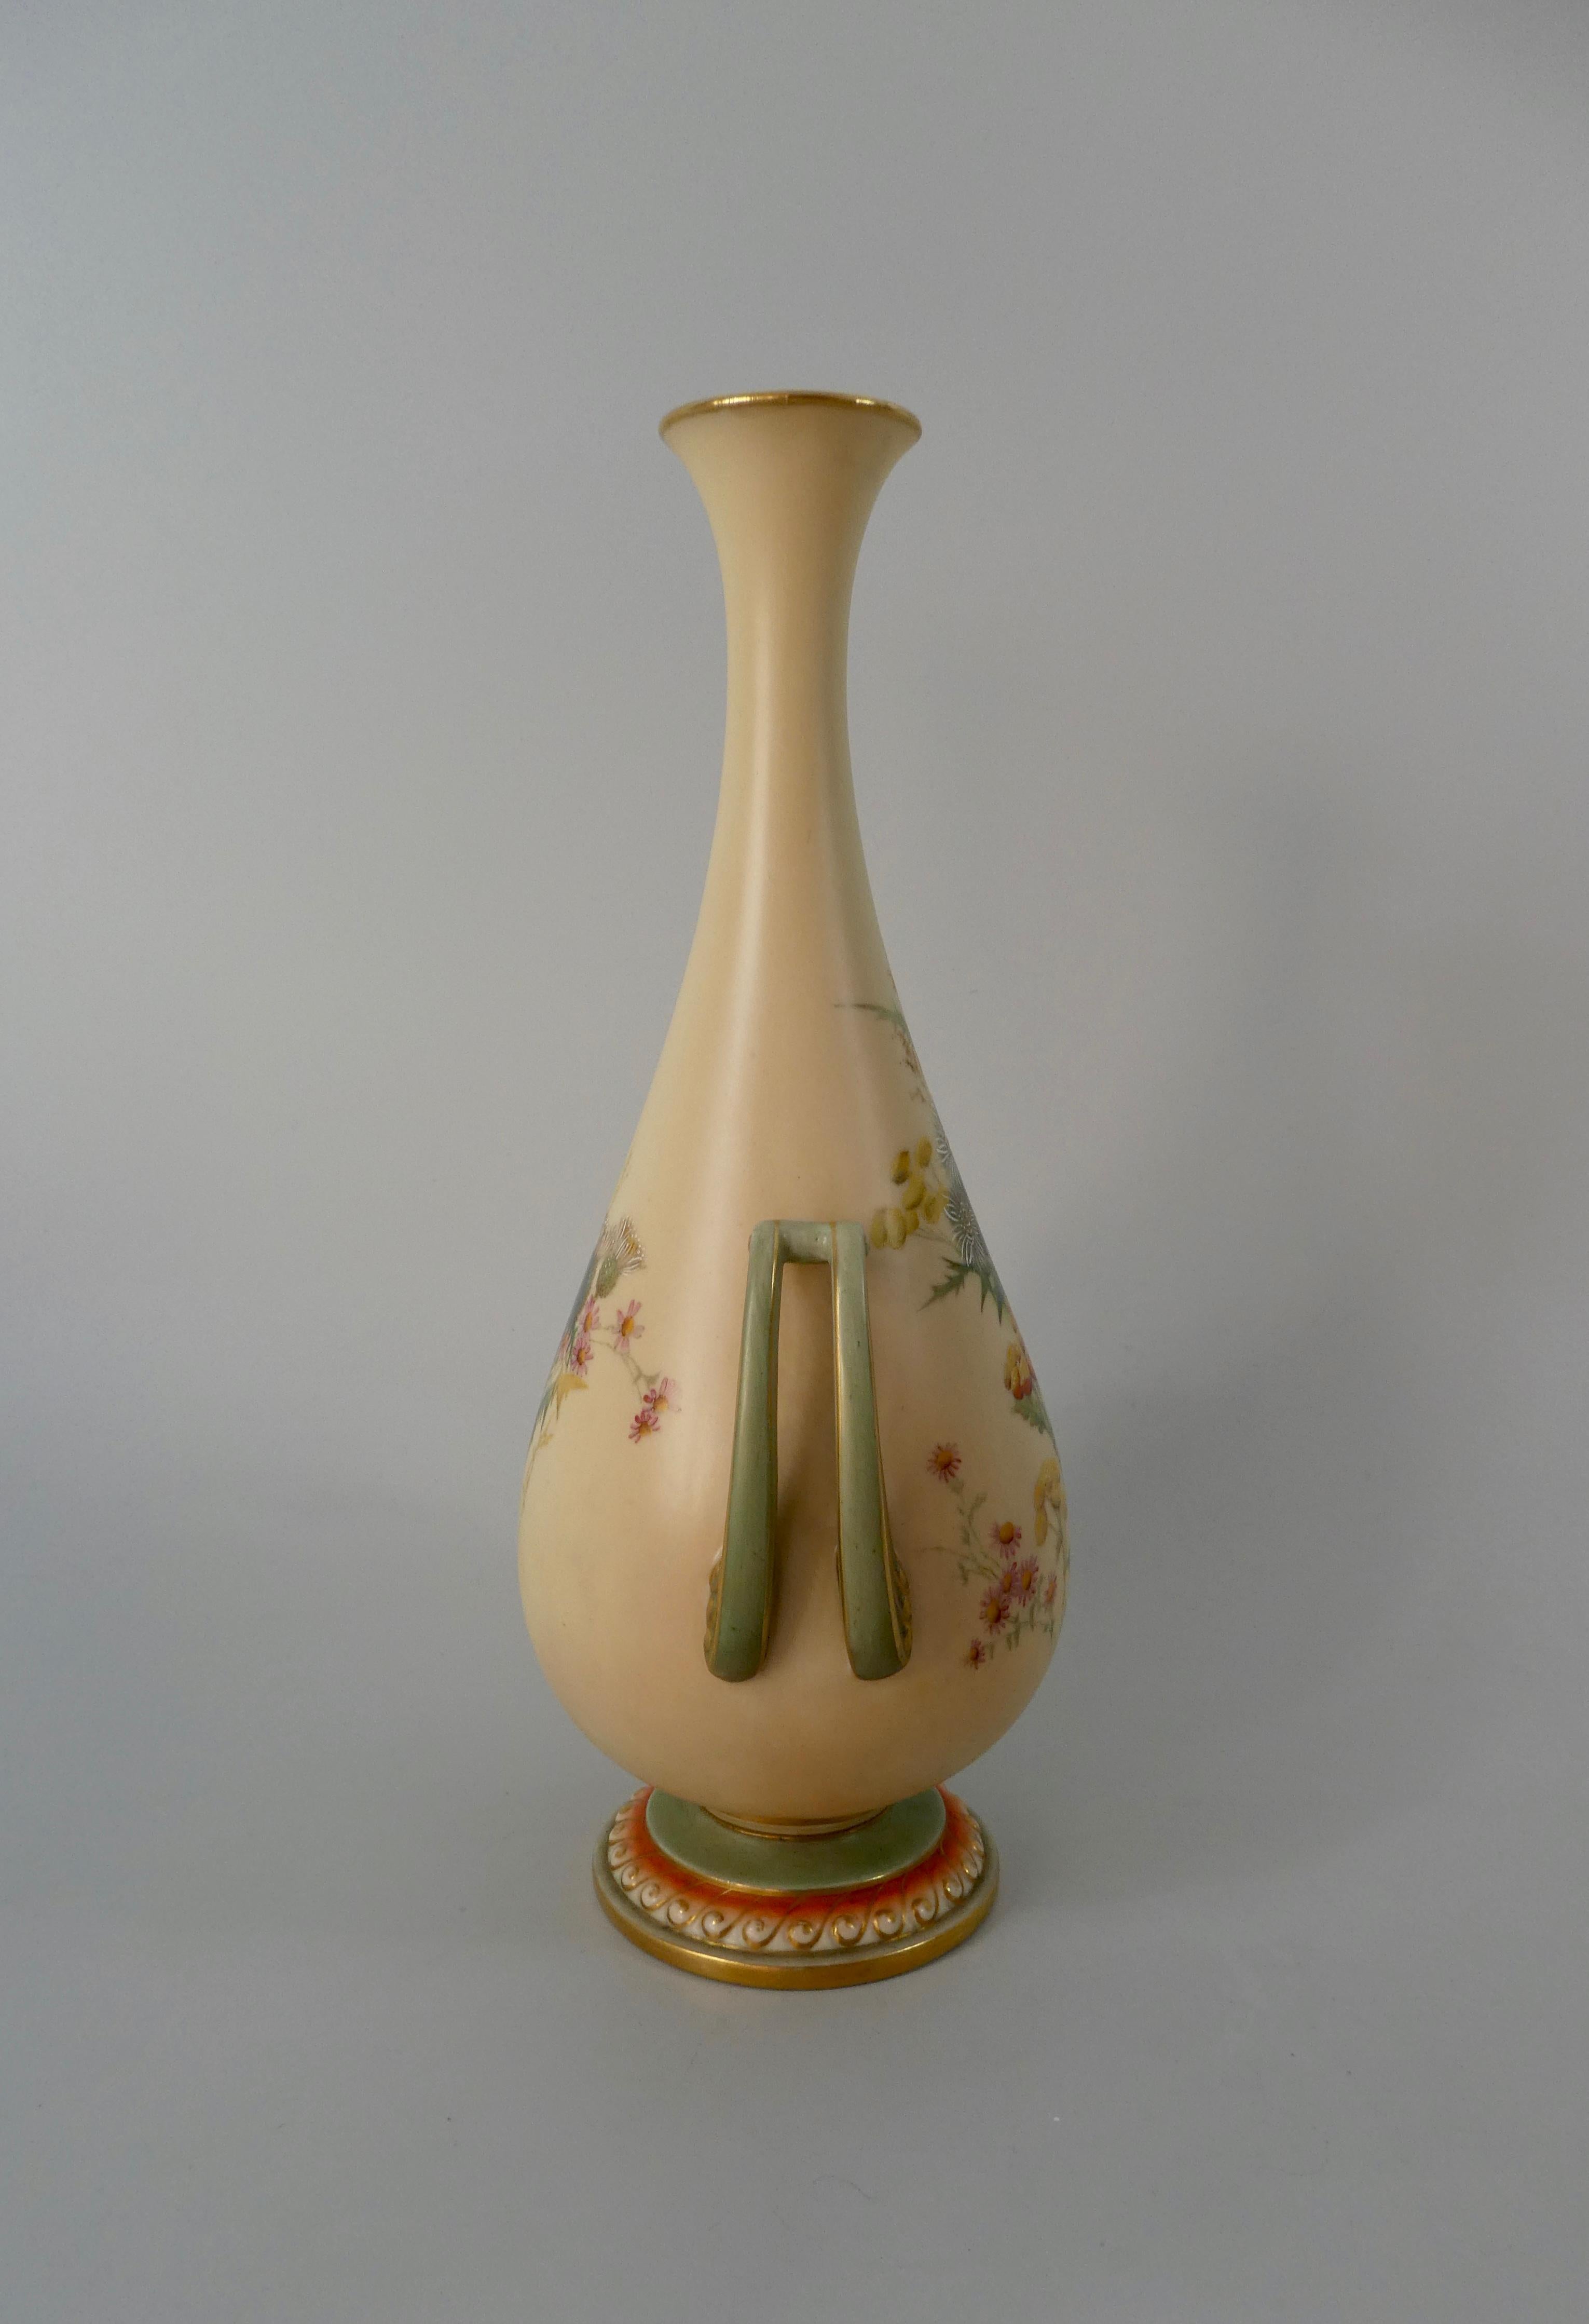 English Royal Worcester Porcelain Vase, Thistle Decoration, Dated 1901